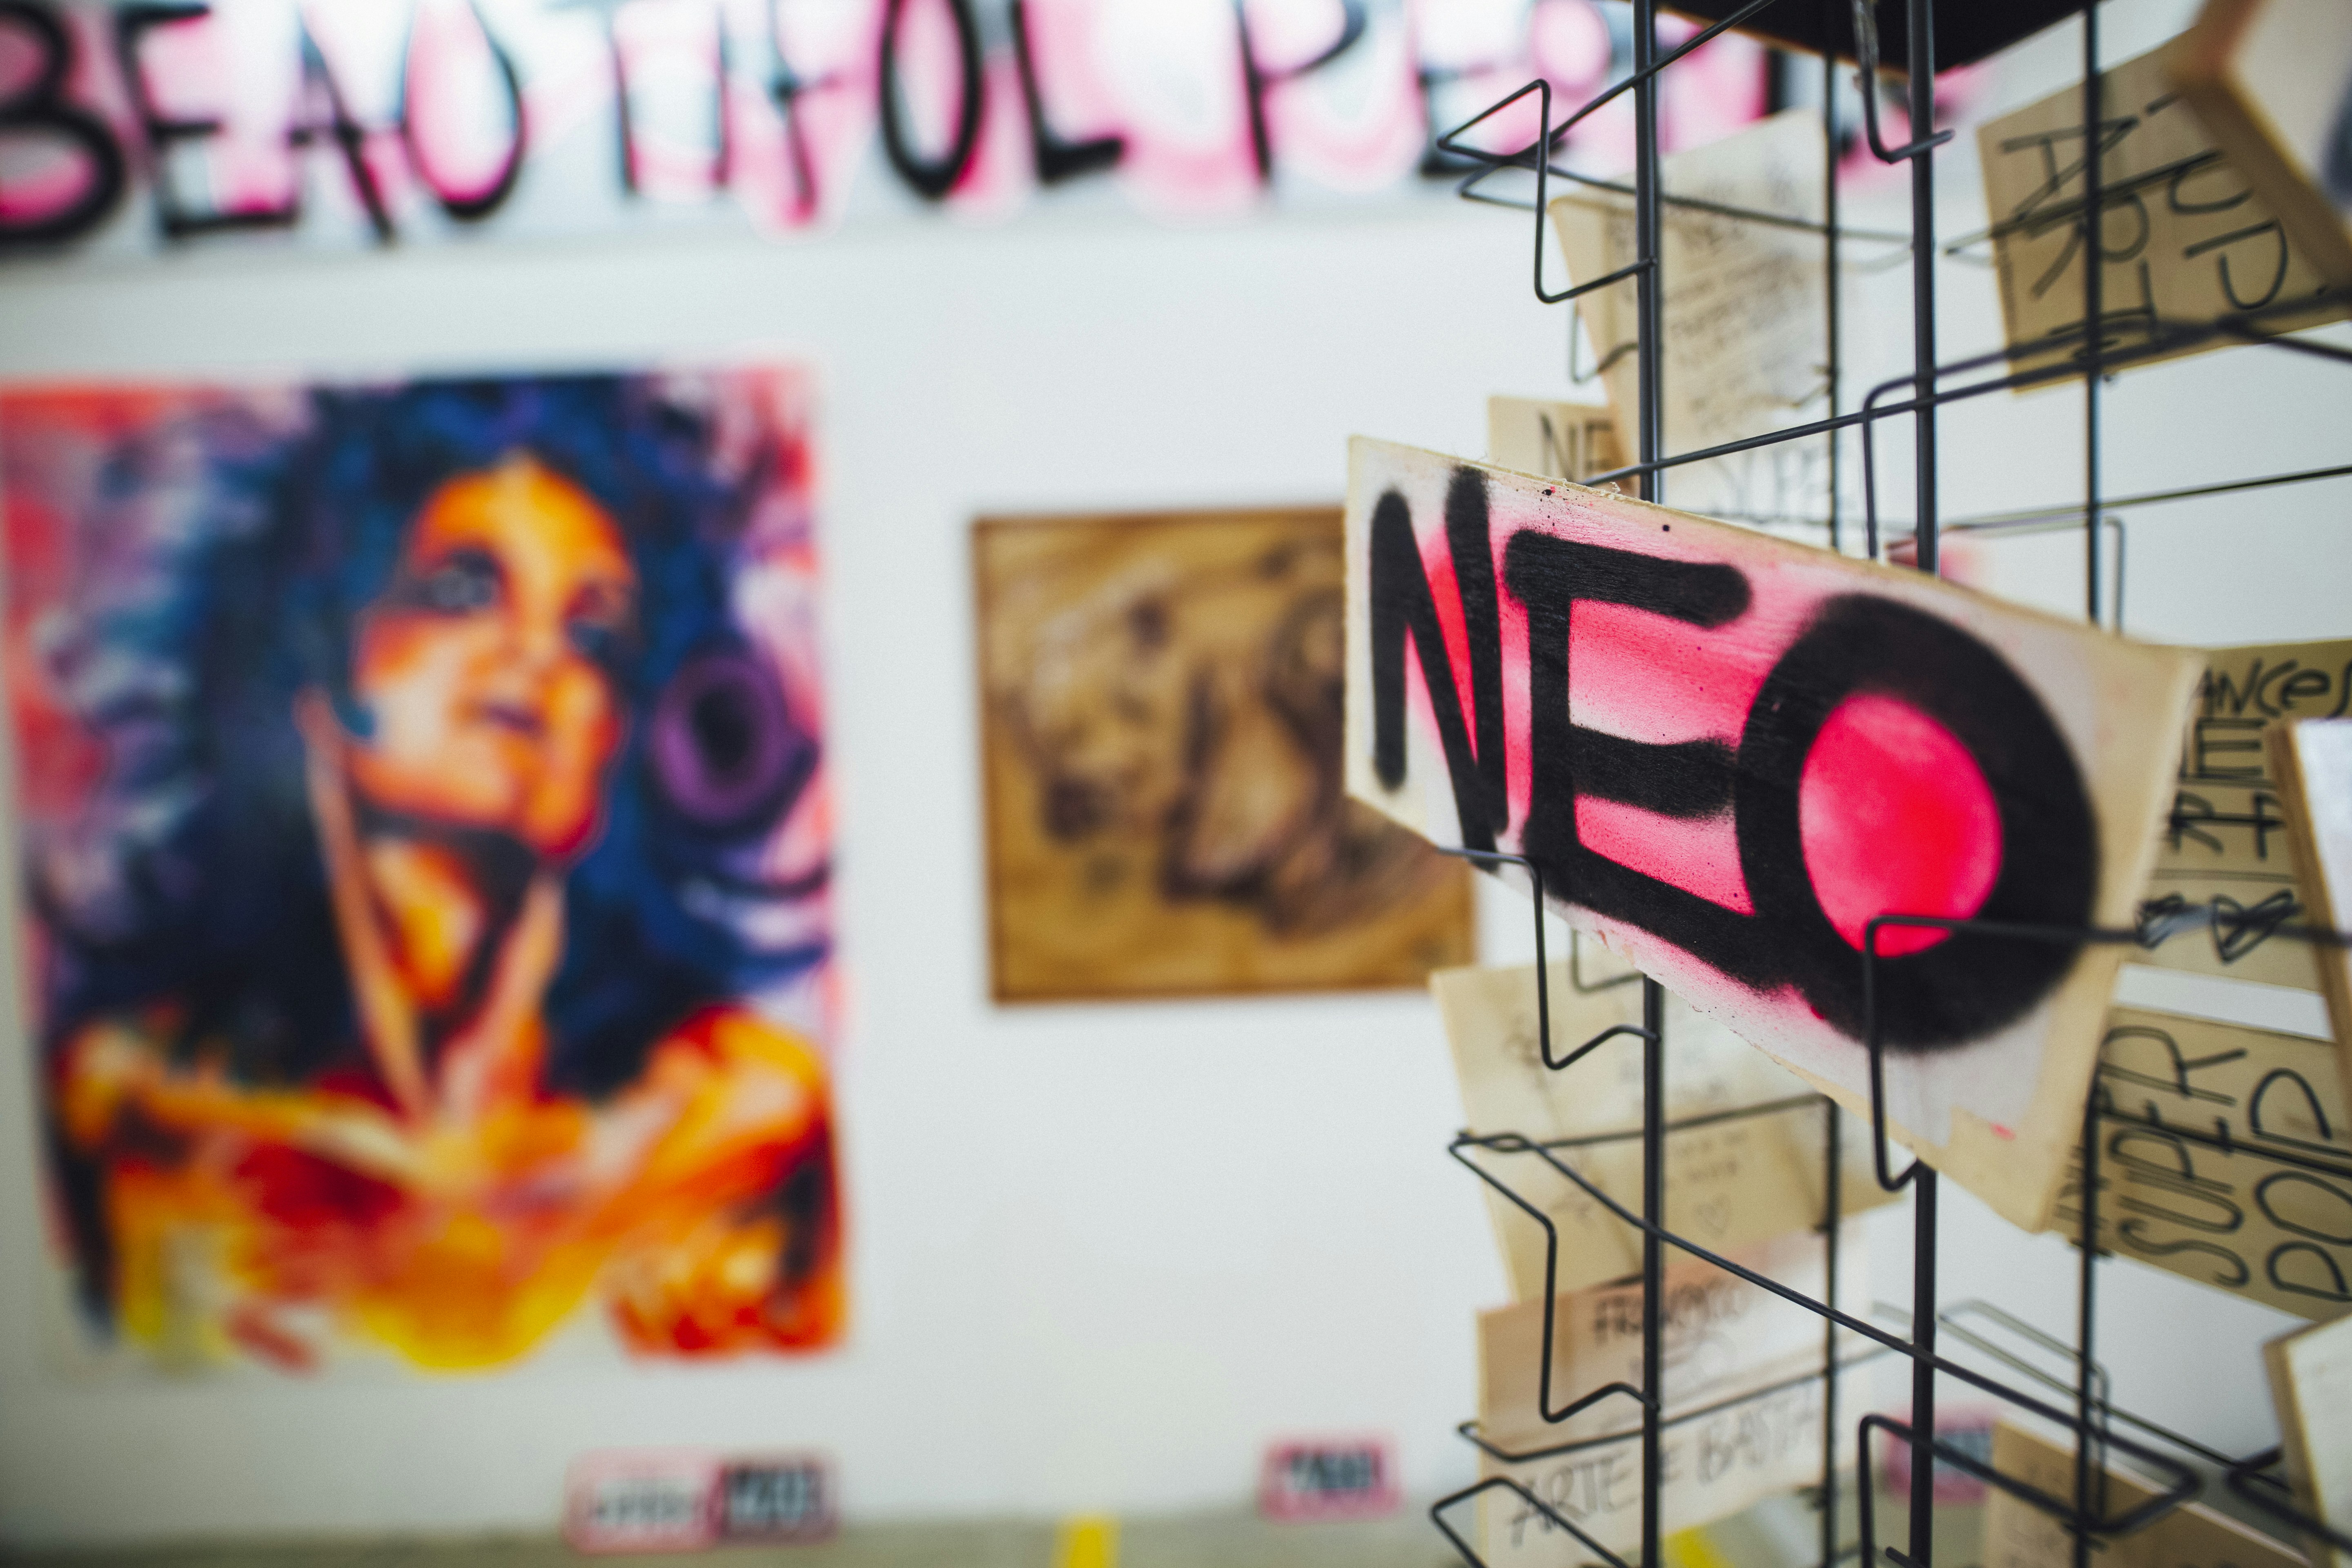 Francesco NEO art - KunstsupermART - Halle 15 - auf AEG Nürnberg - 31. Mai bis 2. Juni 2019